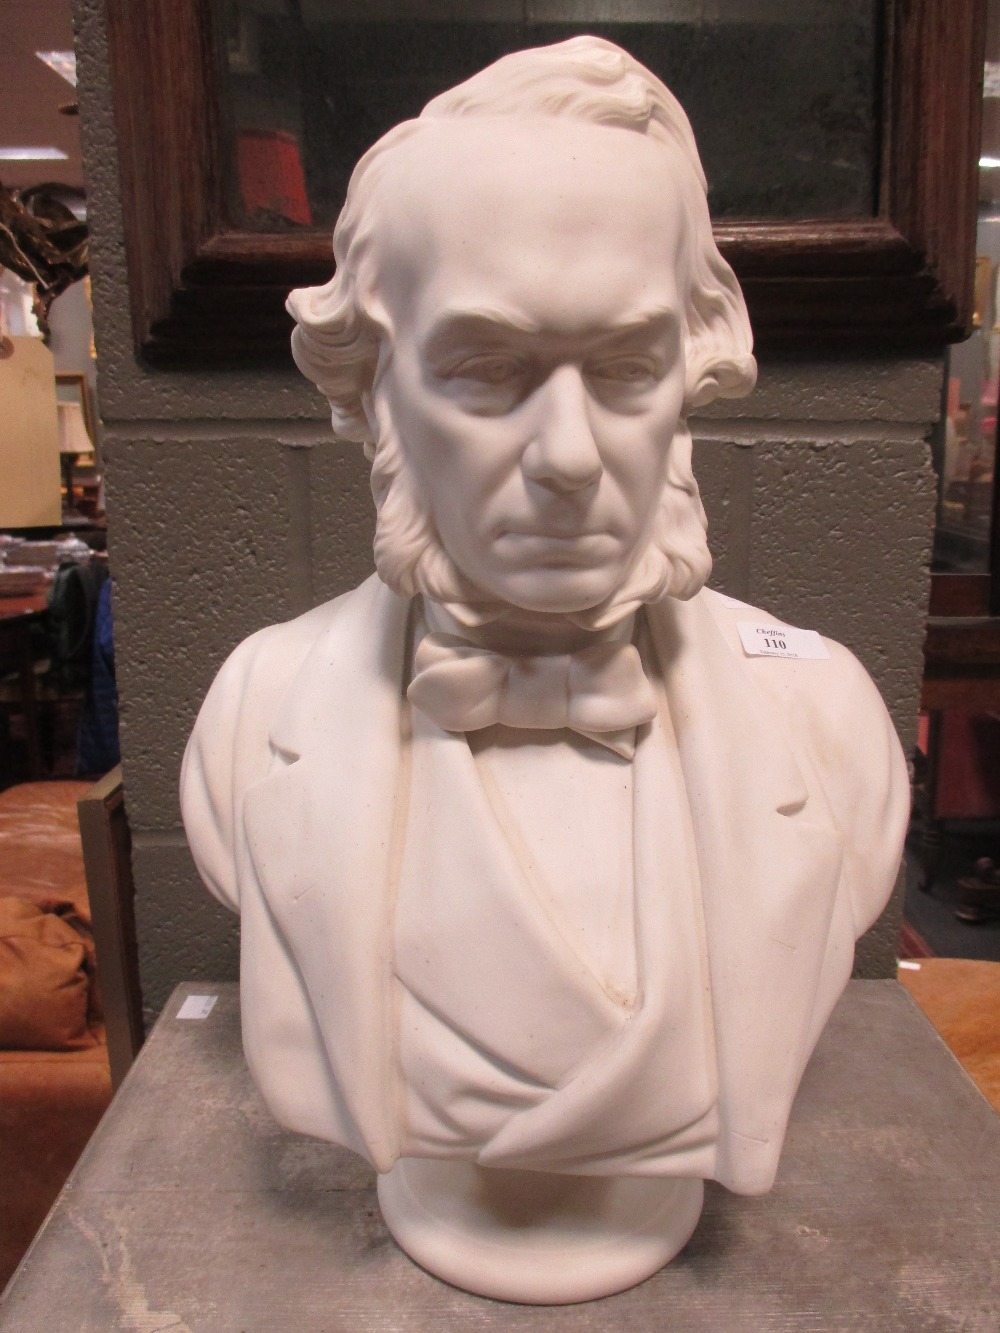 An Adams and Co parian bust of Richard Cobden after E Wyon, 41cm